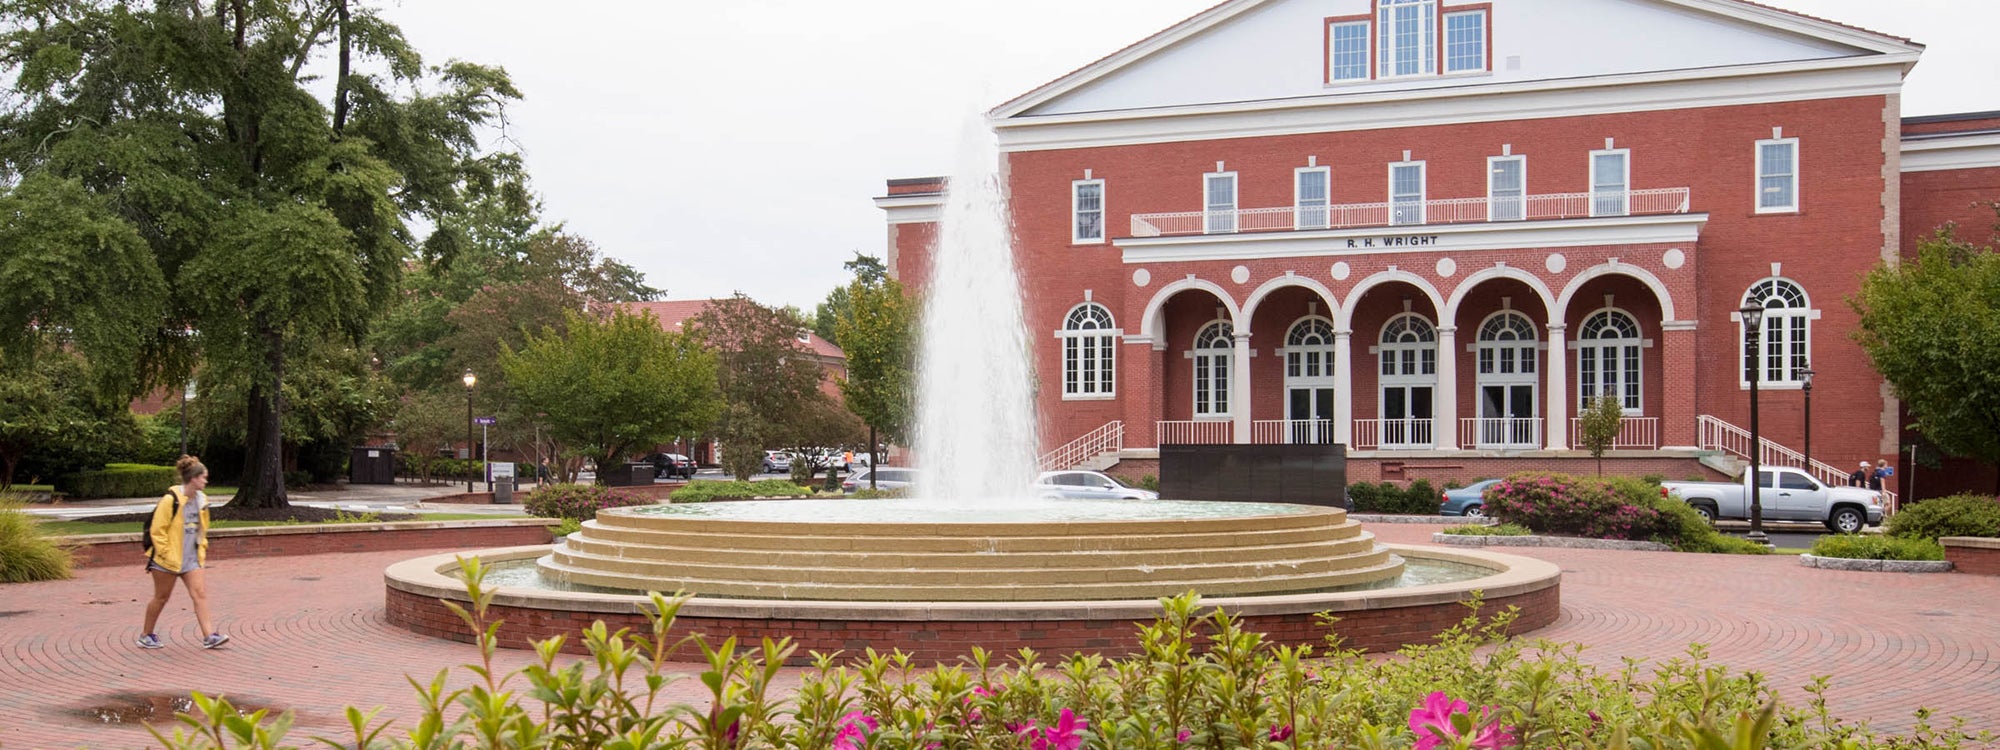 Fountain on main campus